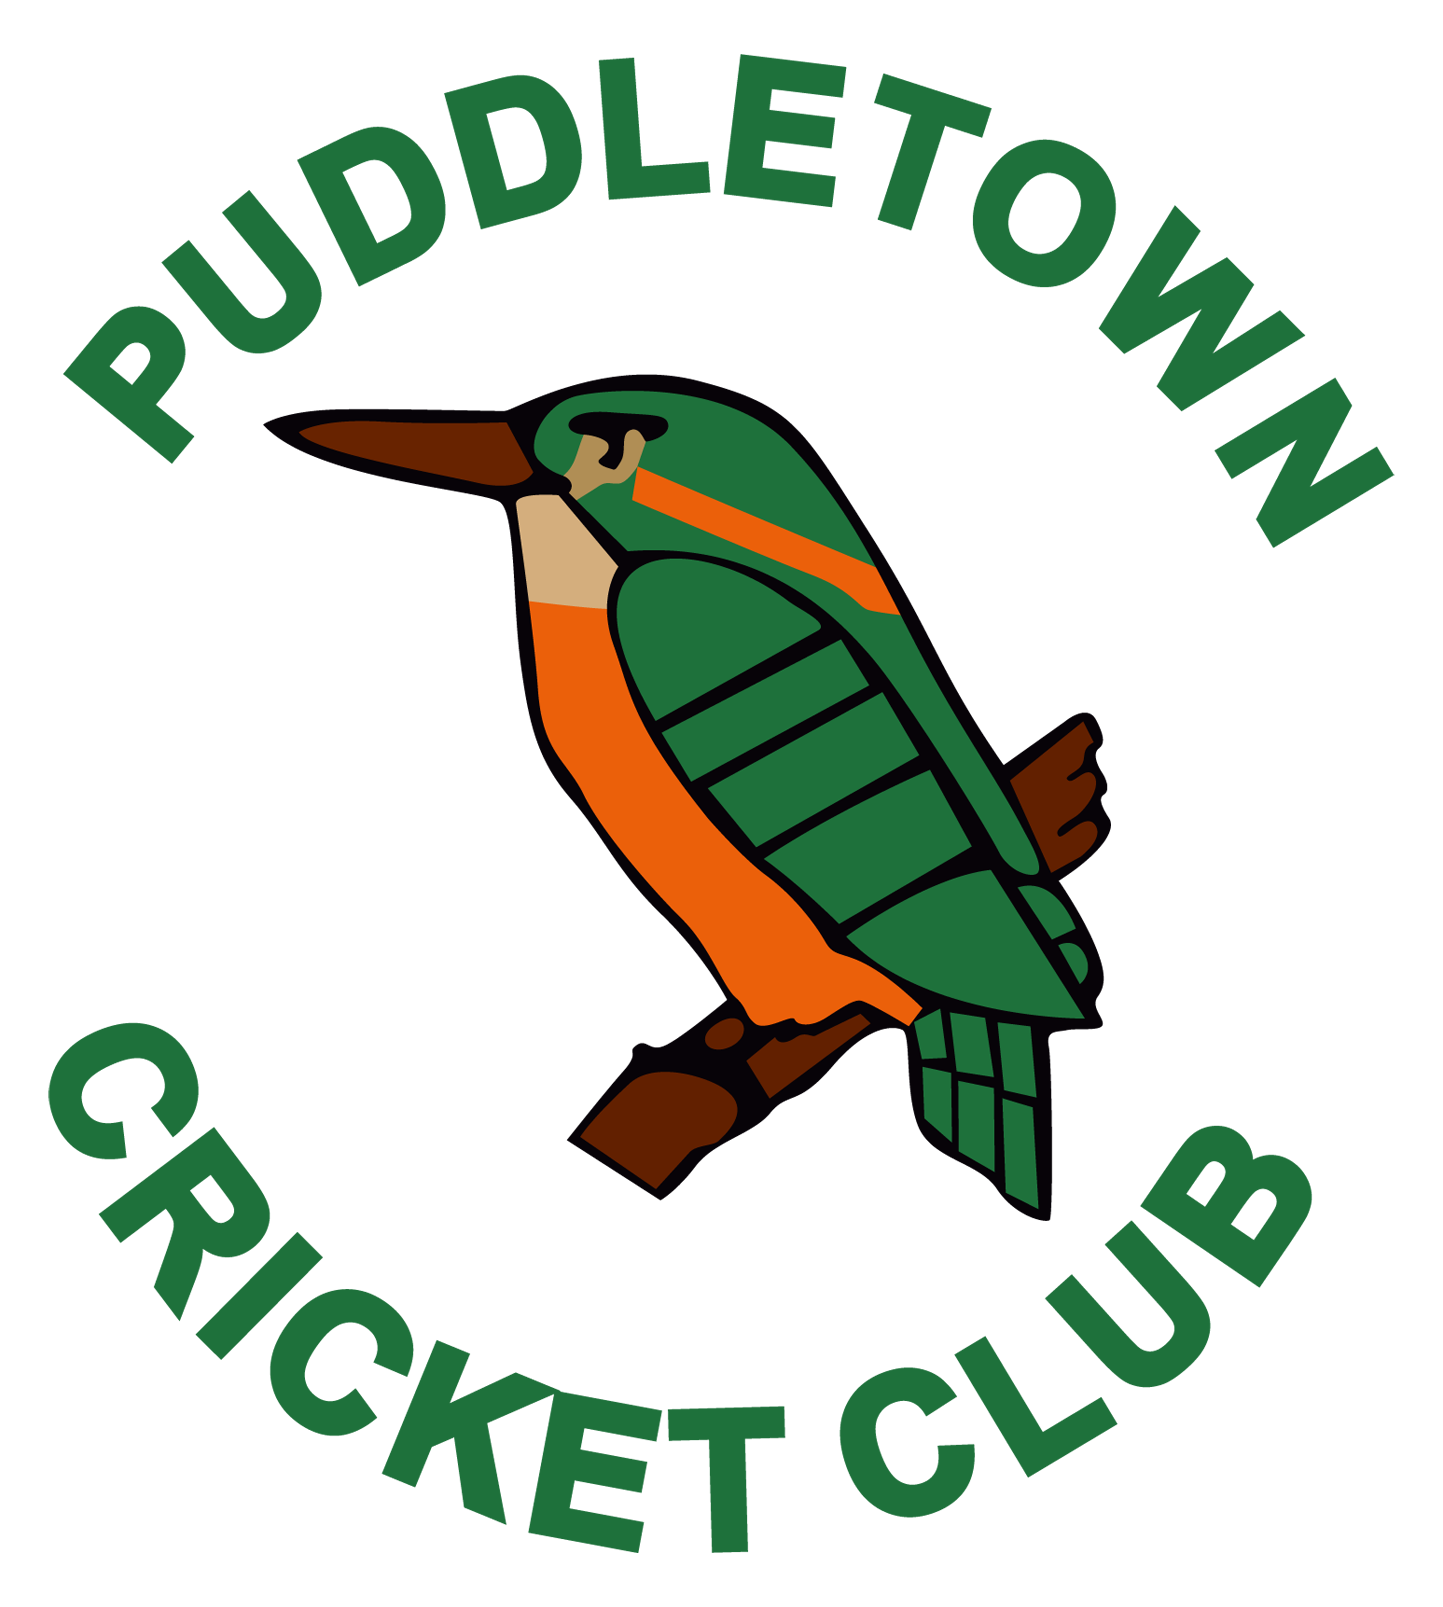 Puddletown CC